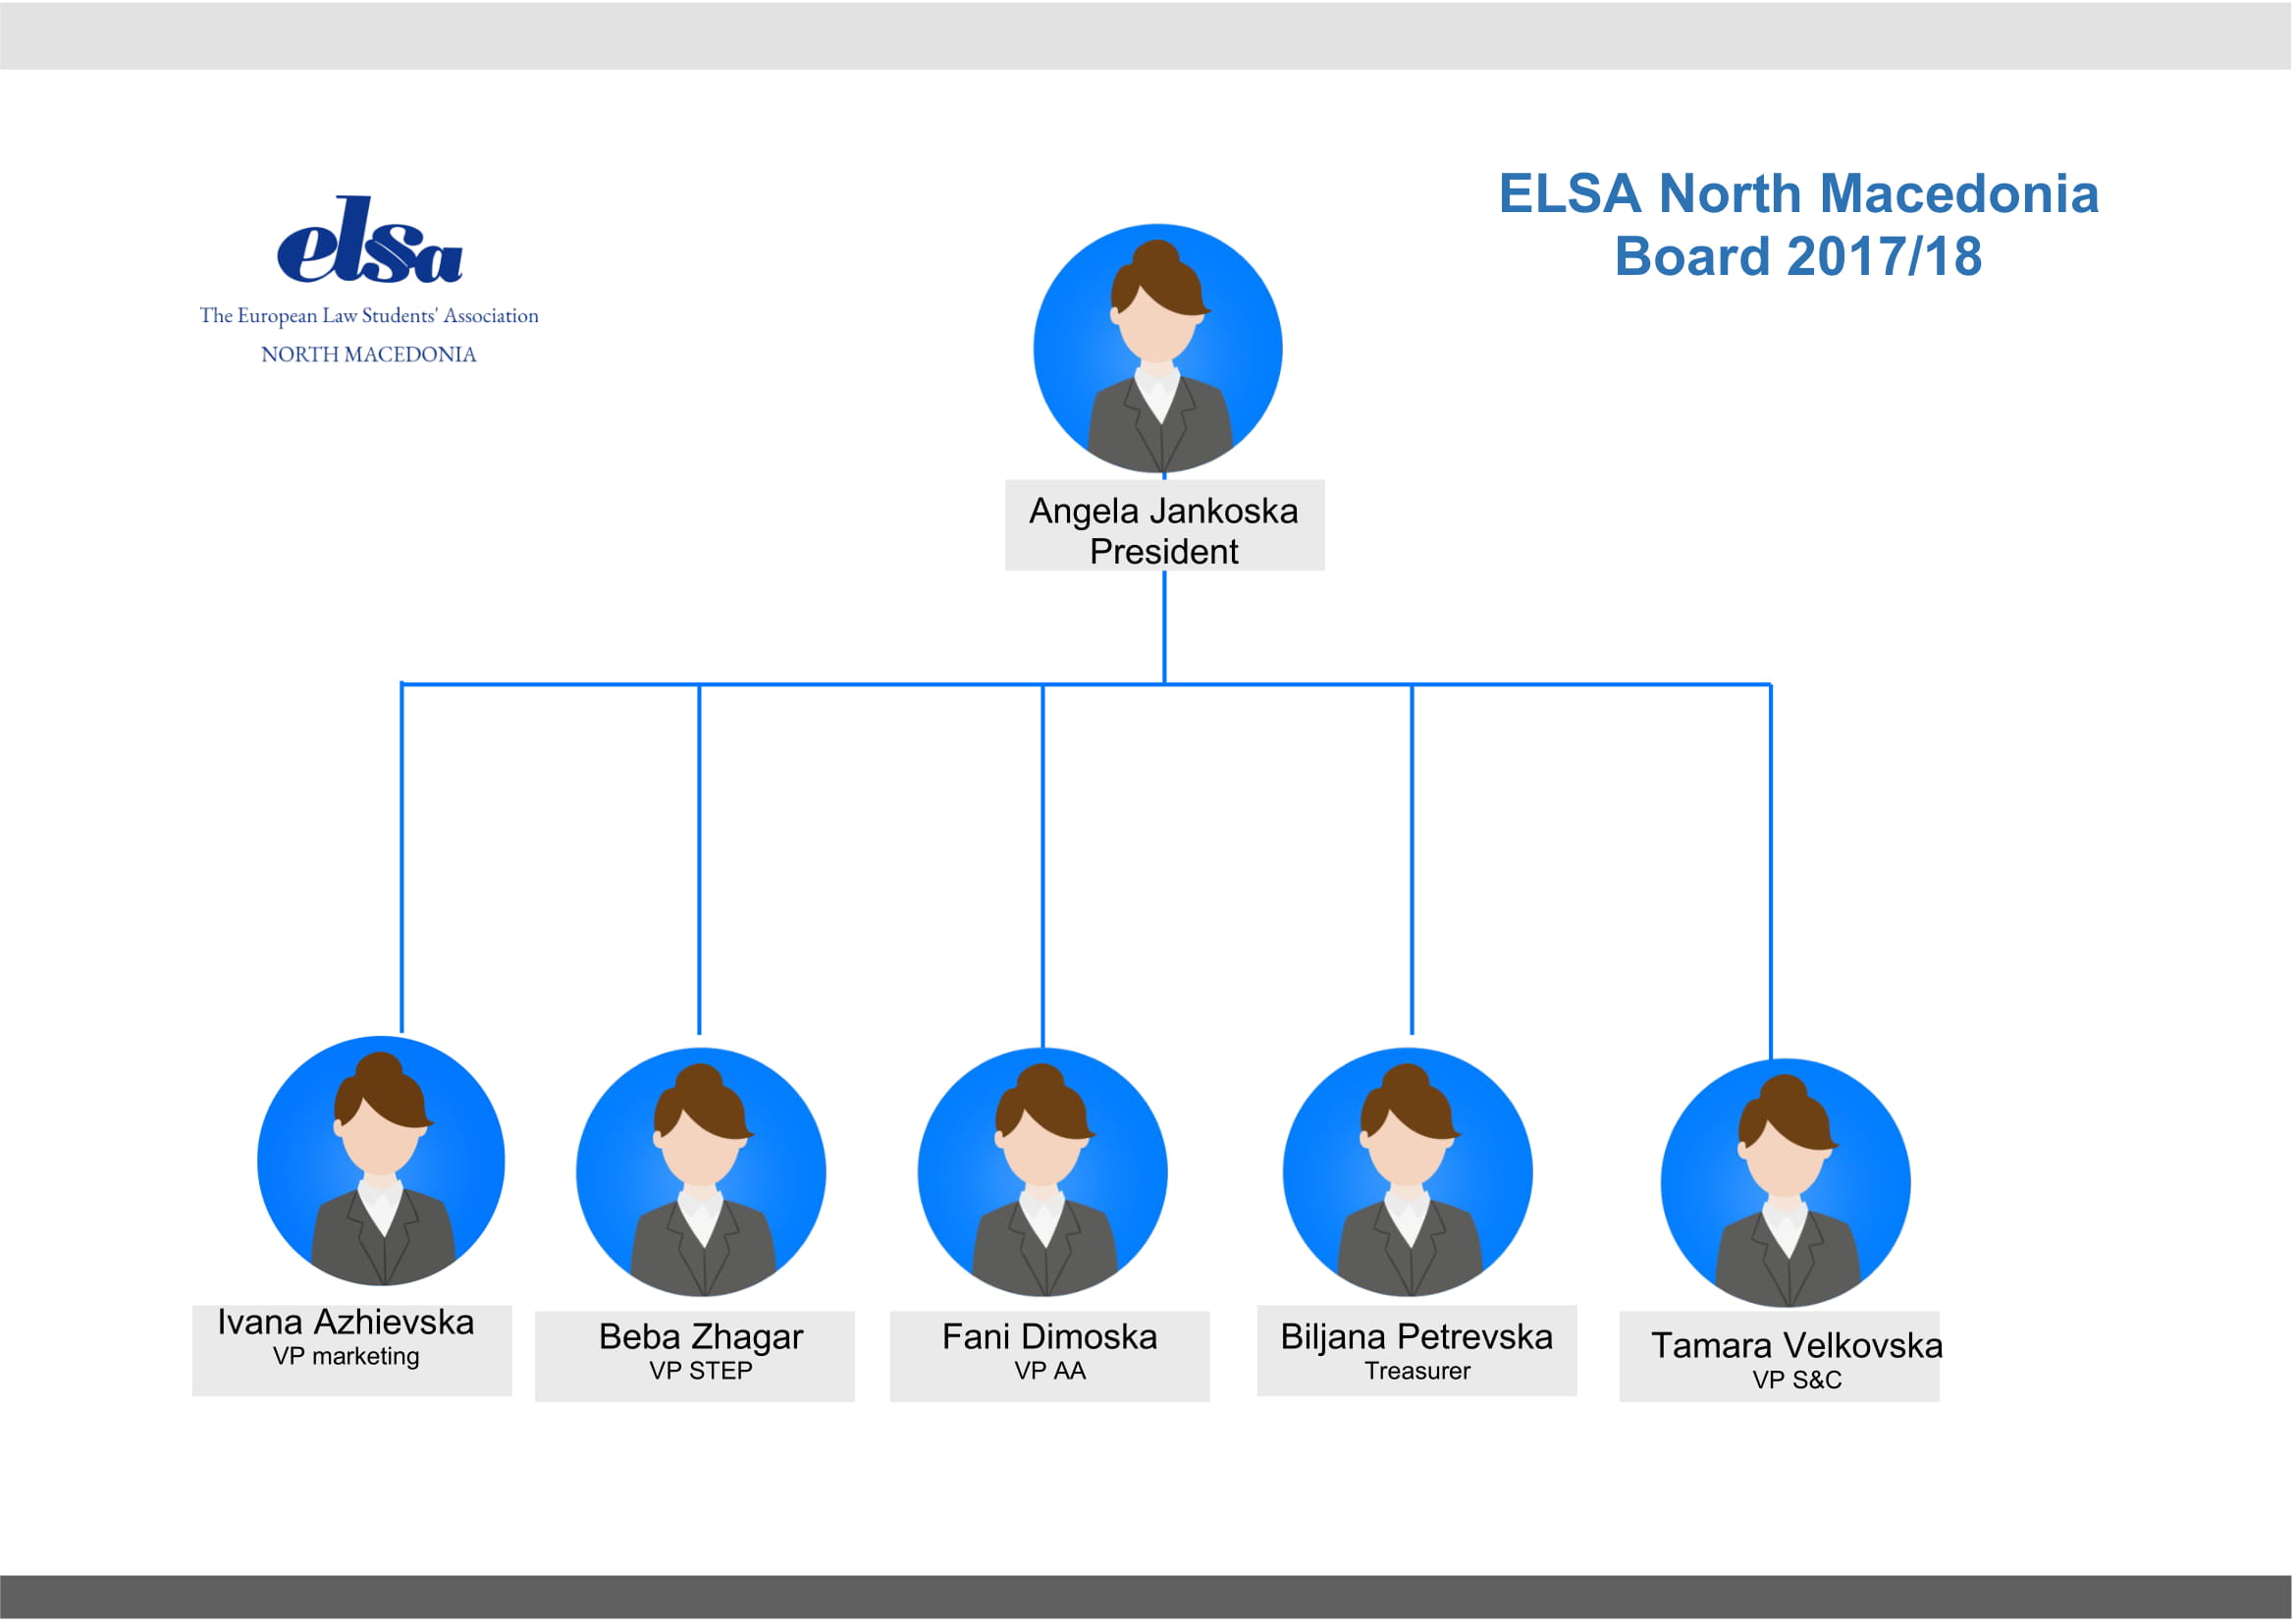 ELSA North Macedonia Board 2019/17